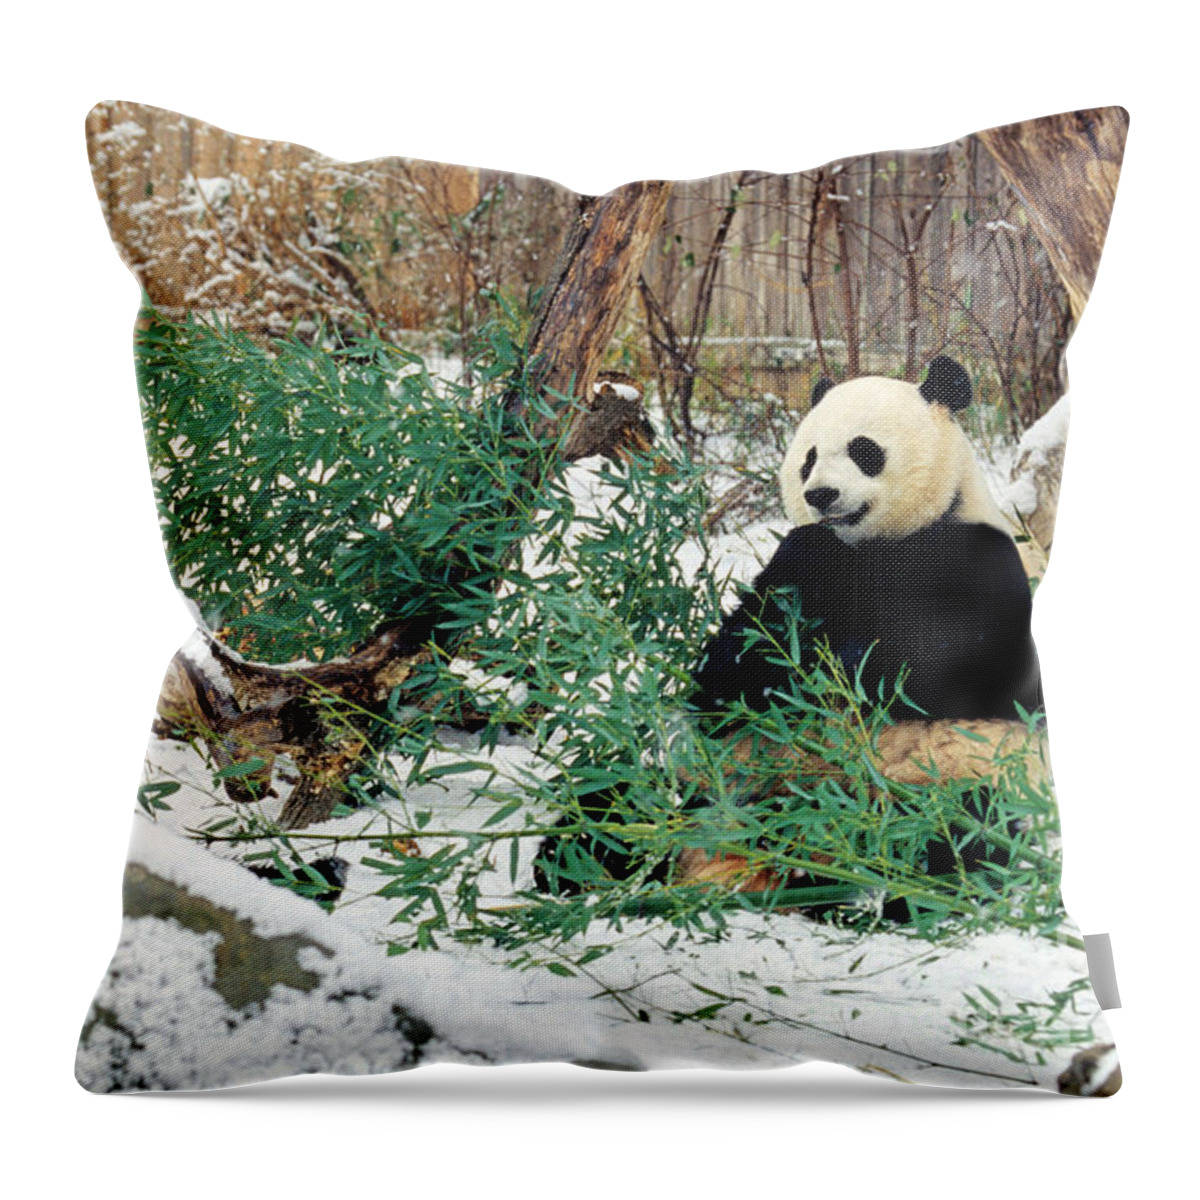 Panda Throw Pillow featuring the photograph Panda Bears in Snow by Chris Scroggins